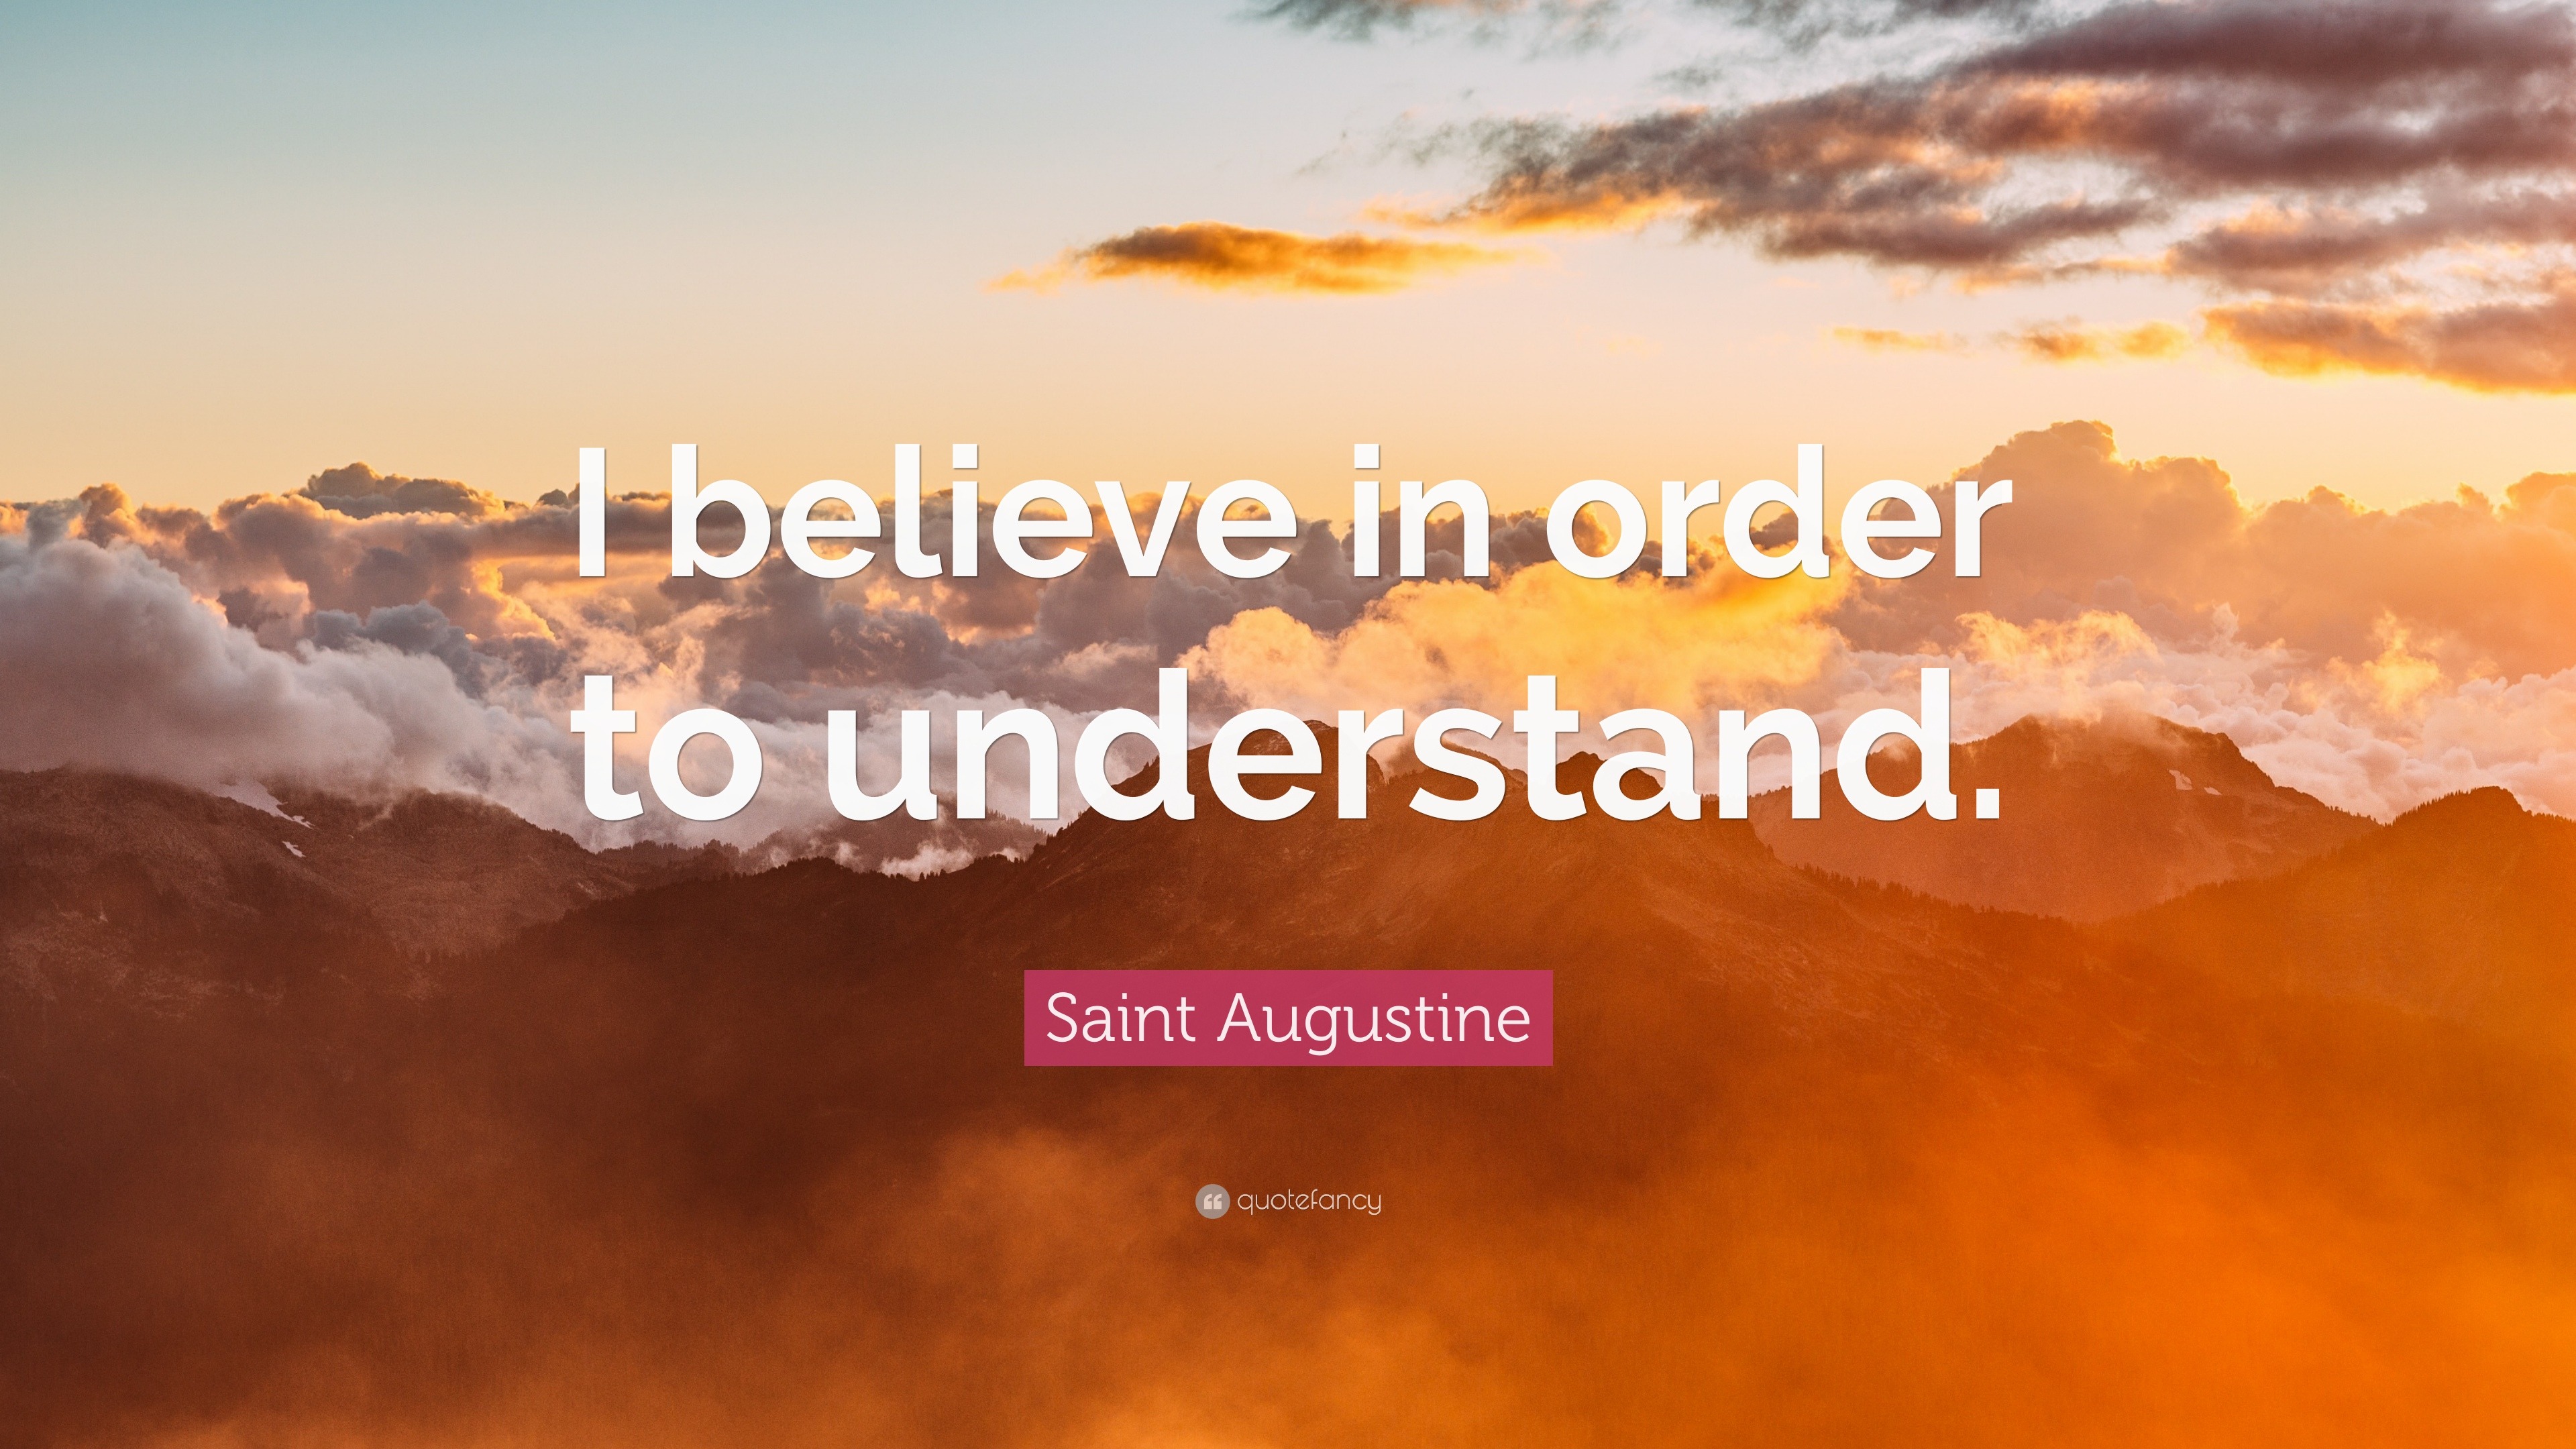 Saint Augustine Quote “I believe in order to understand.”